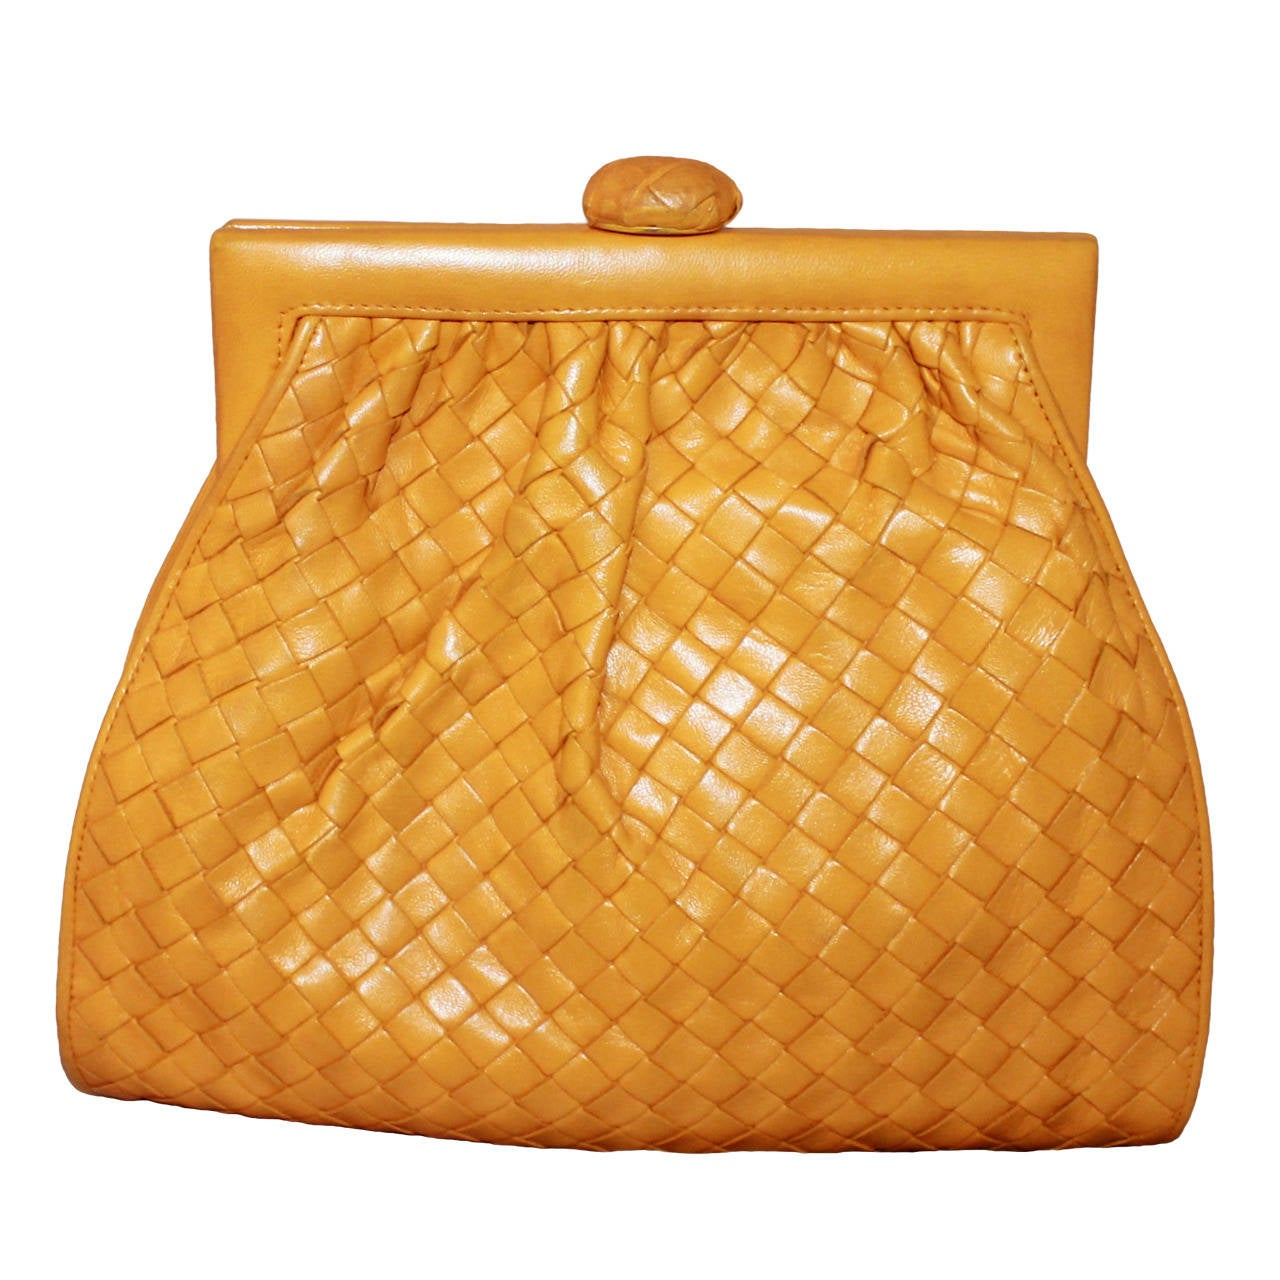 Bottega Veneta Mustard Belt Bag Daniel Lee